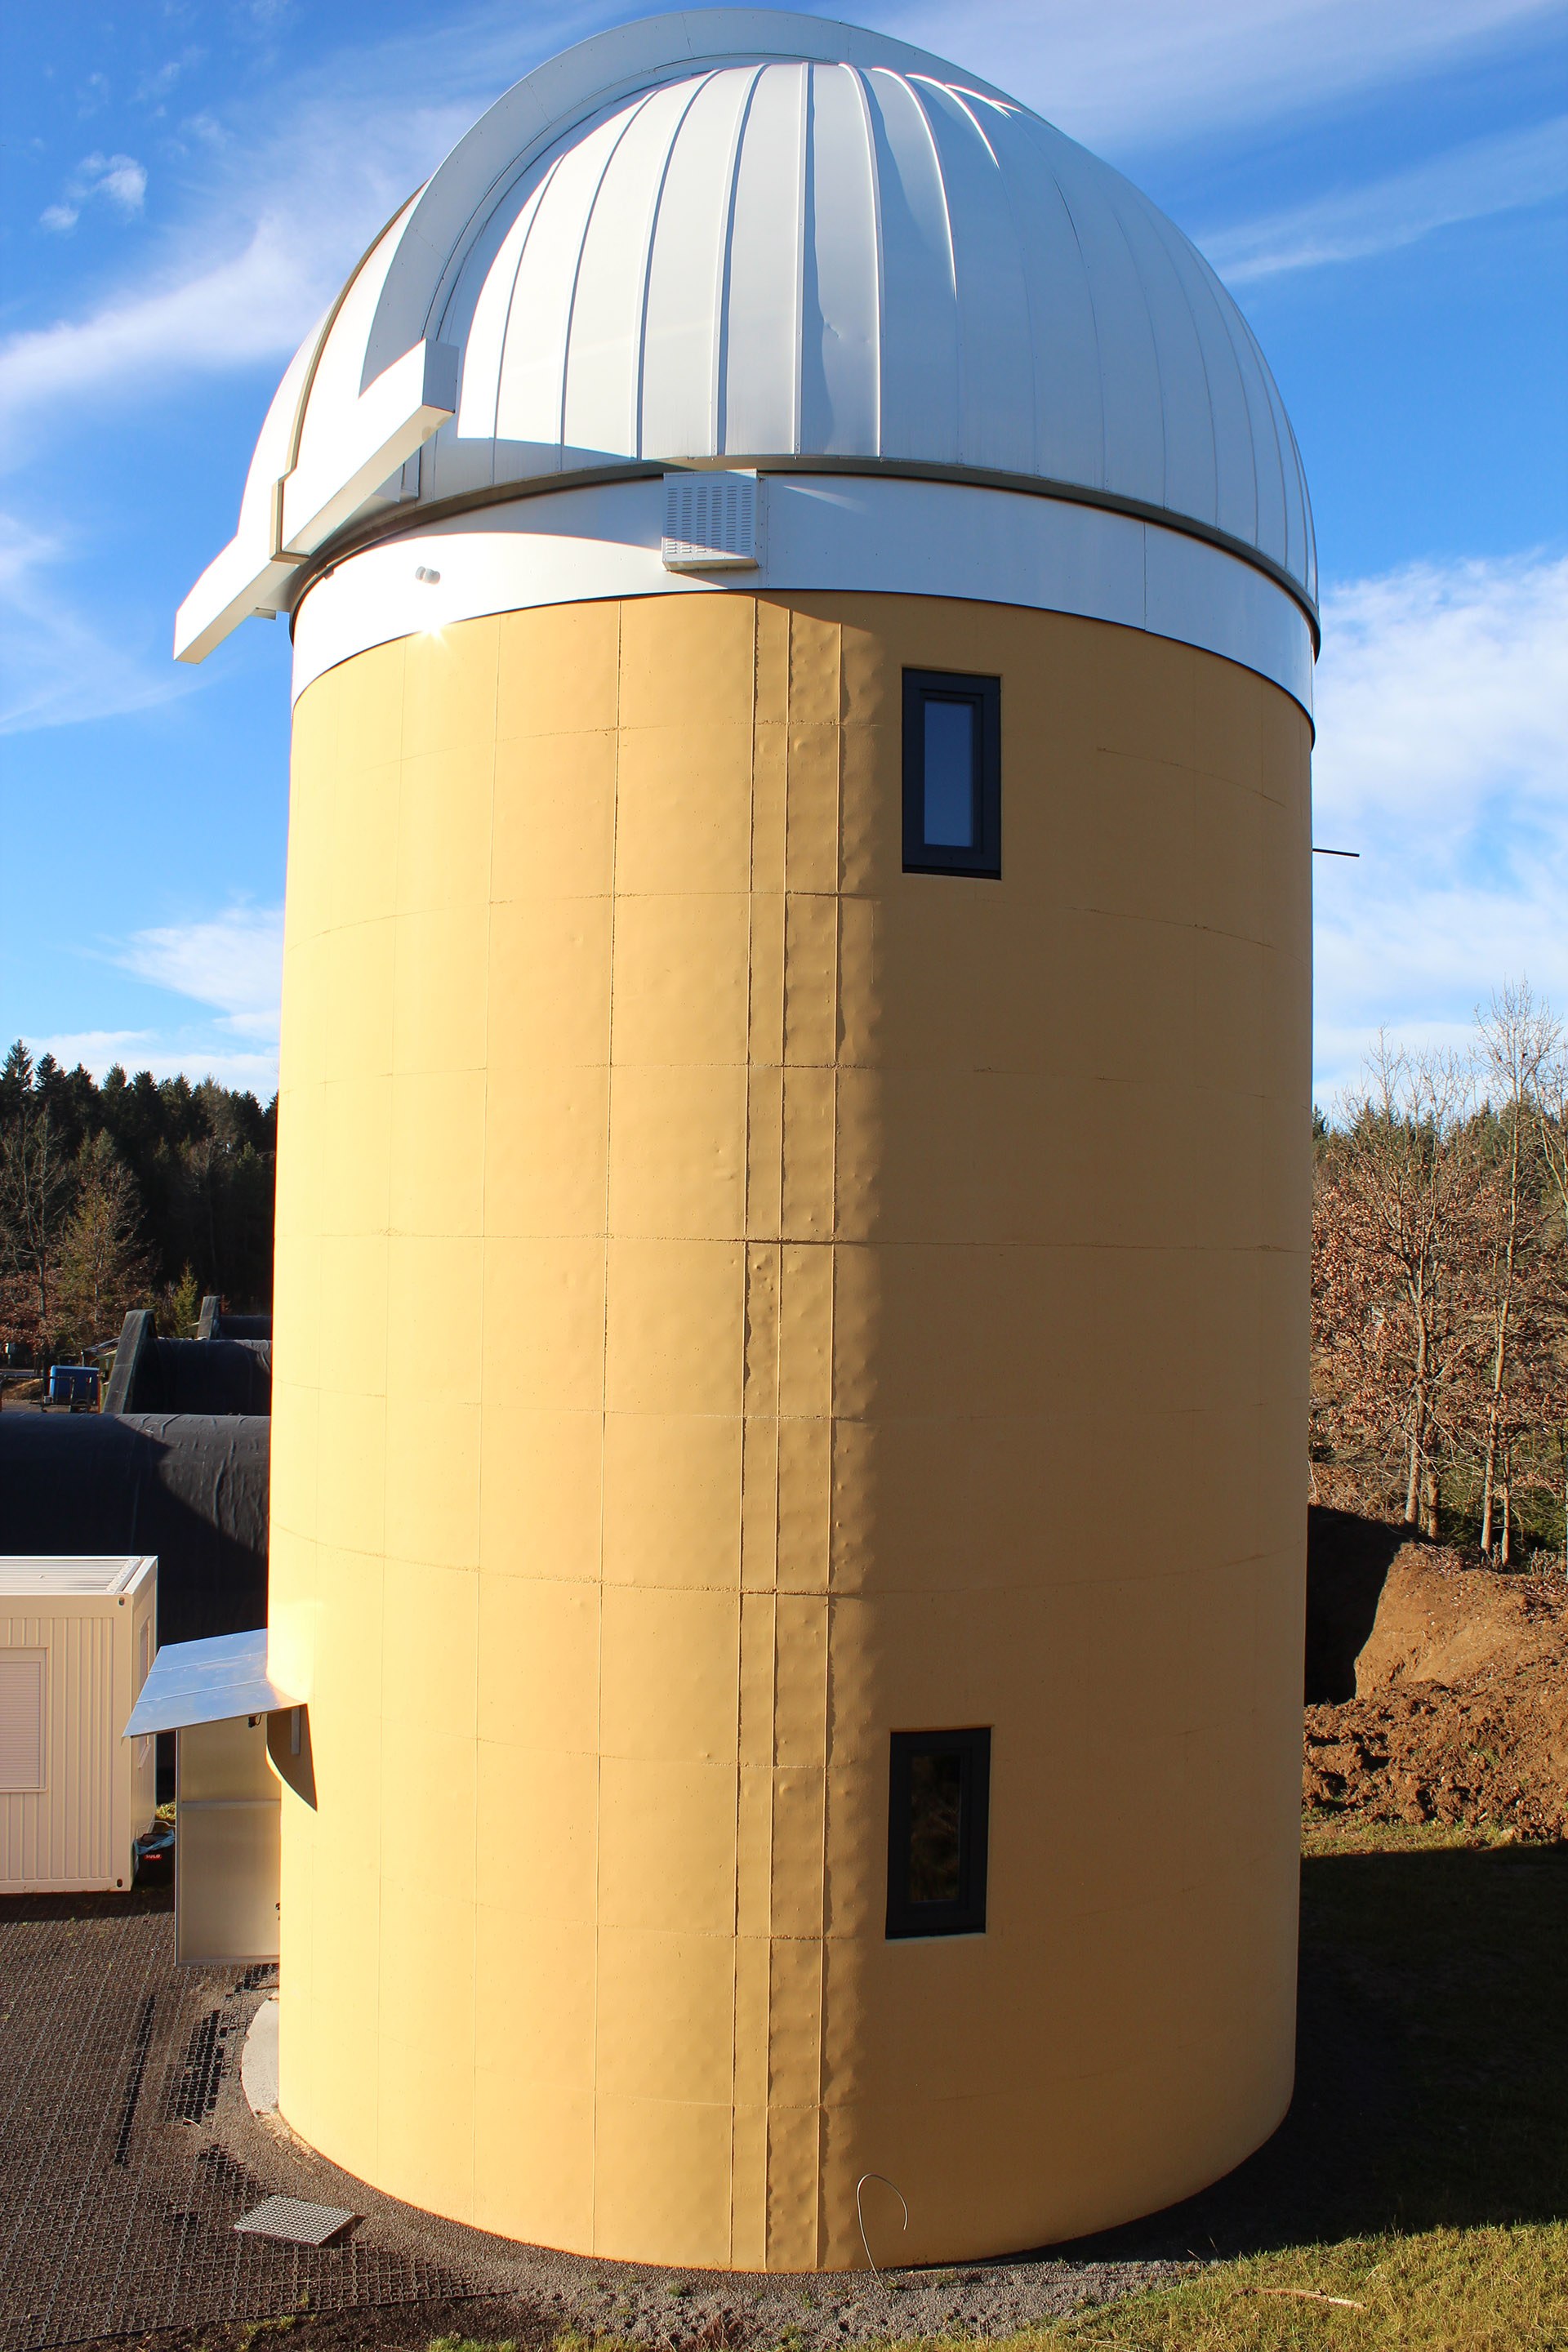 Tower of the Johannes Kepler Observatory